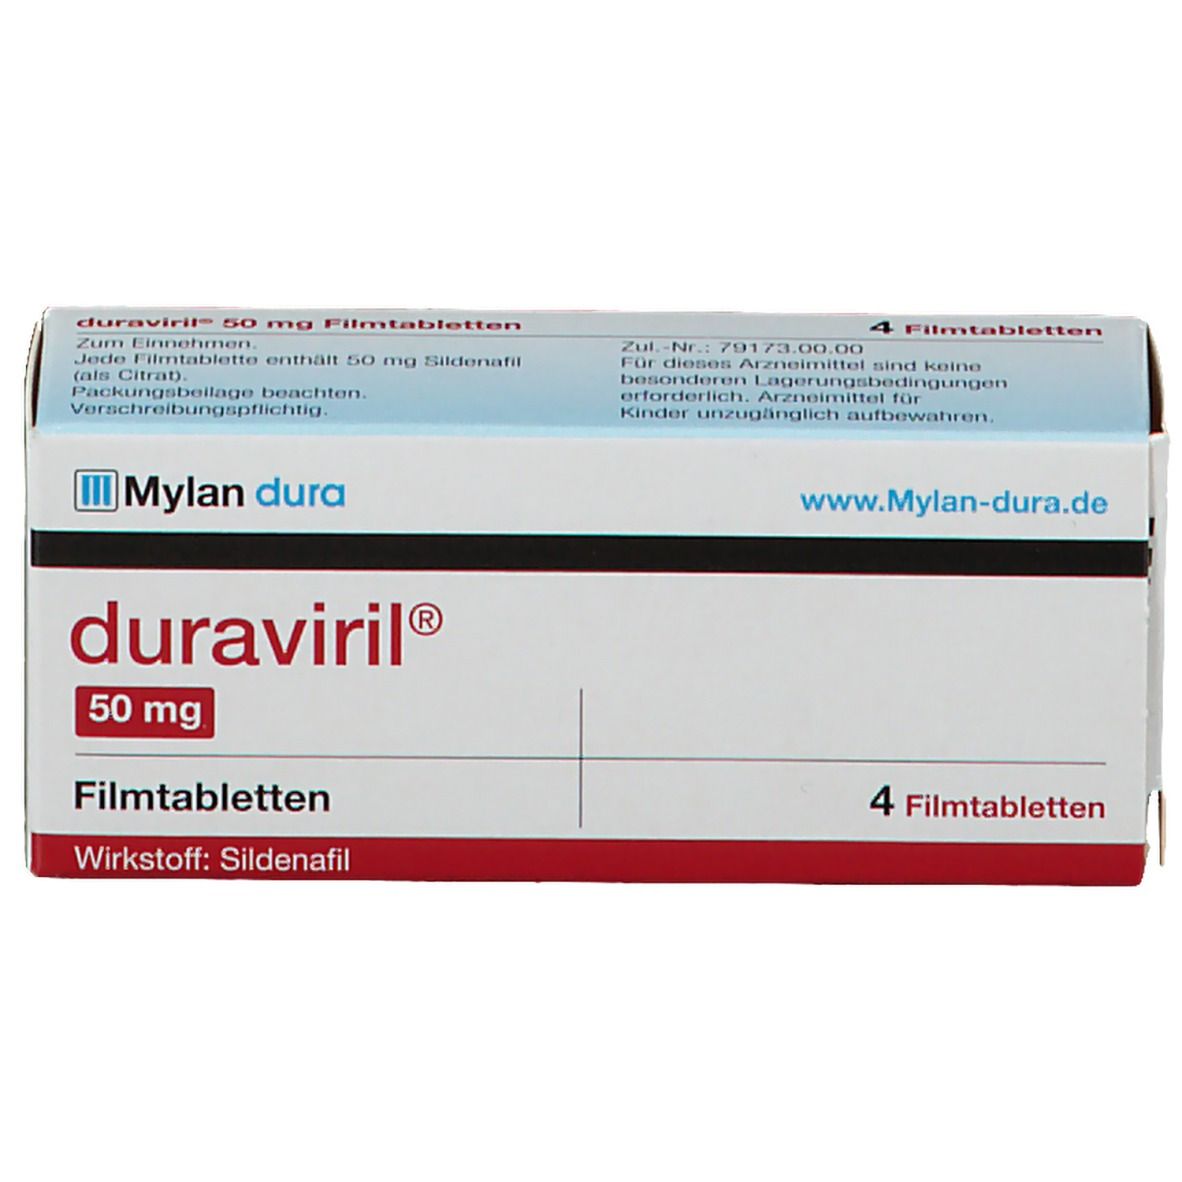 duraviril® 50 mg